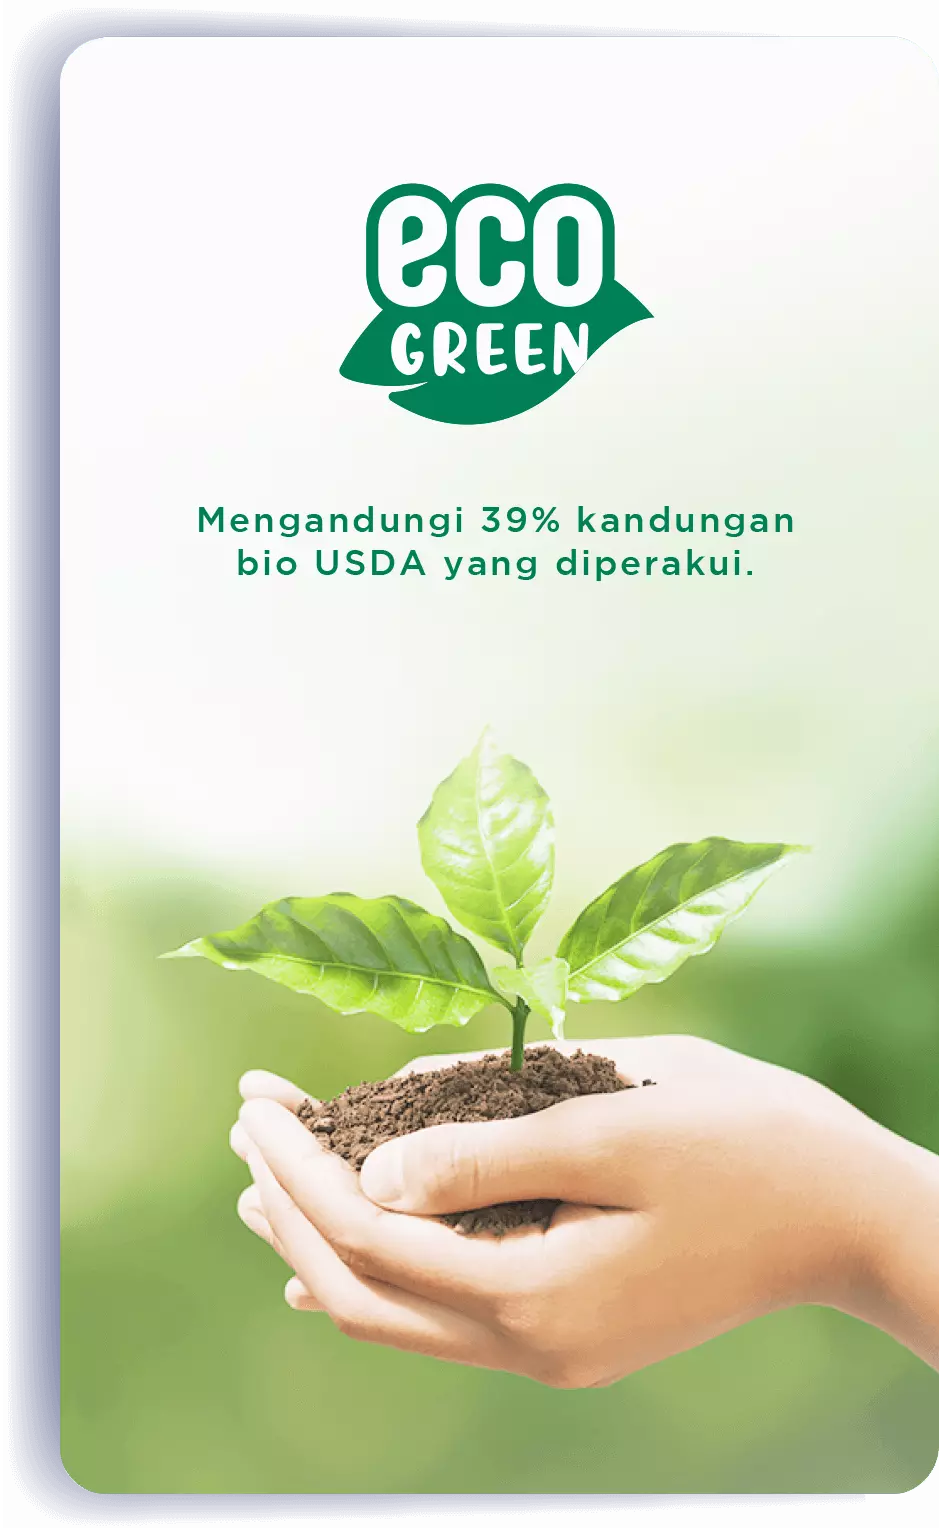 eco GREEN: Mengandungi 39% kandungan bio USDA yang diperakui.